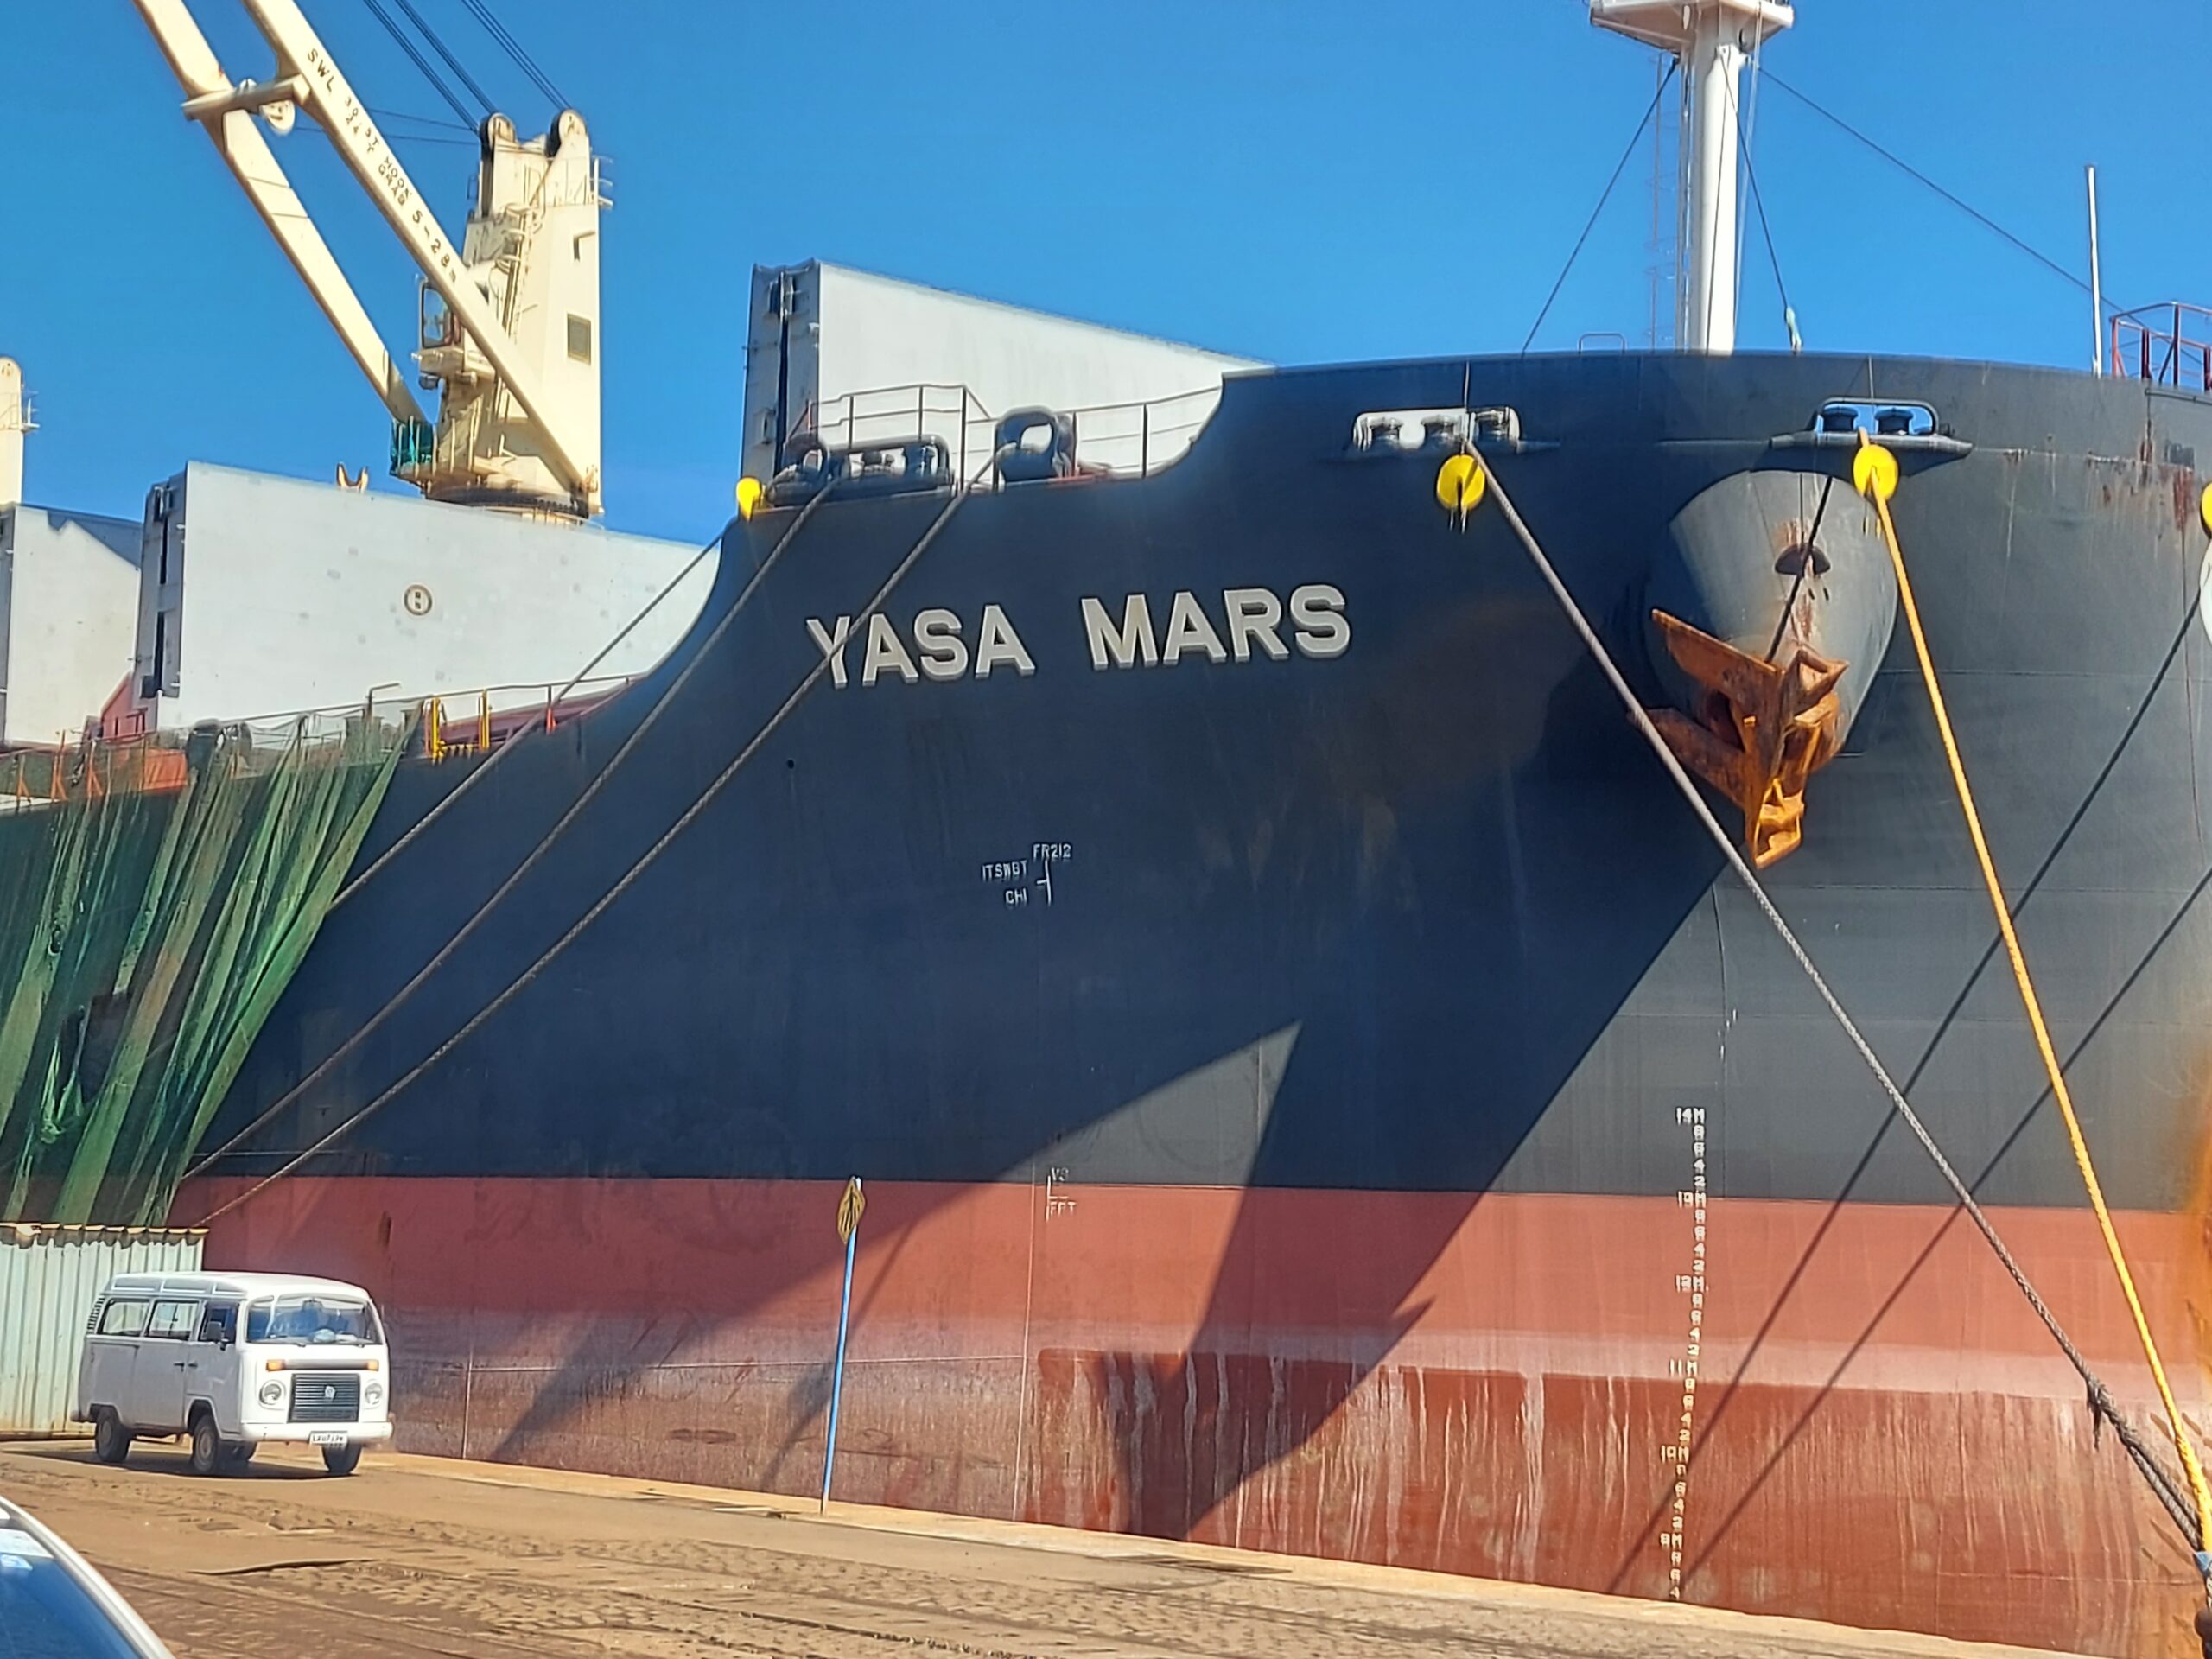 Yasa Mars